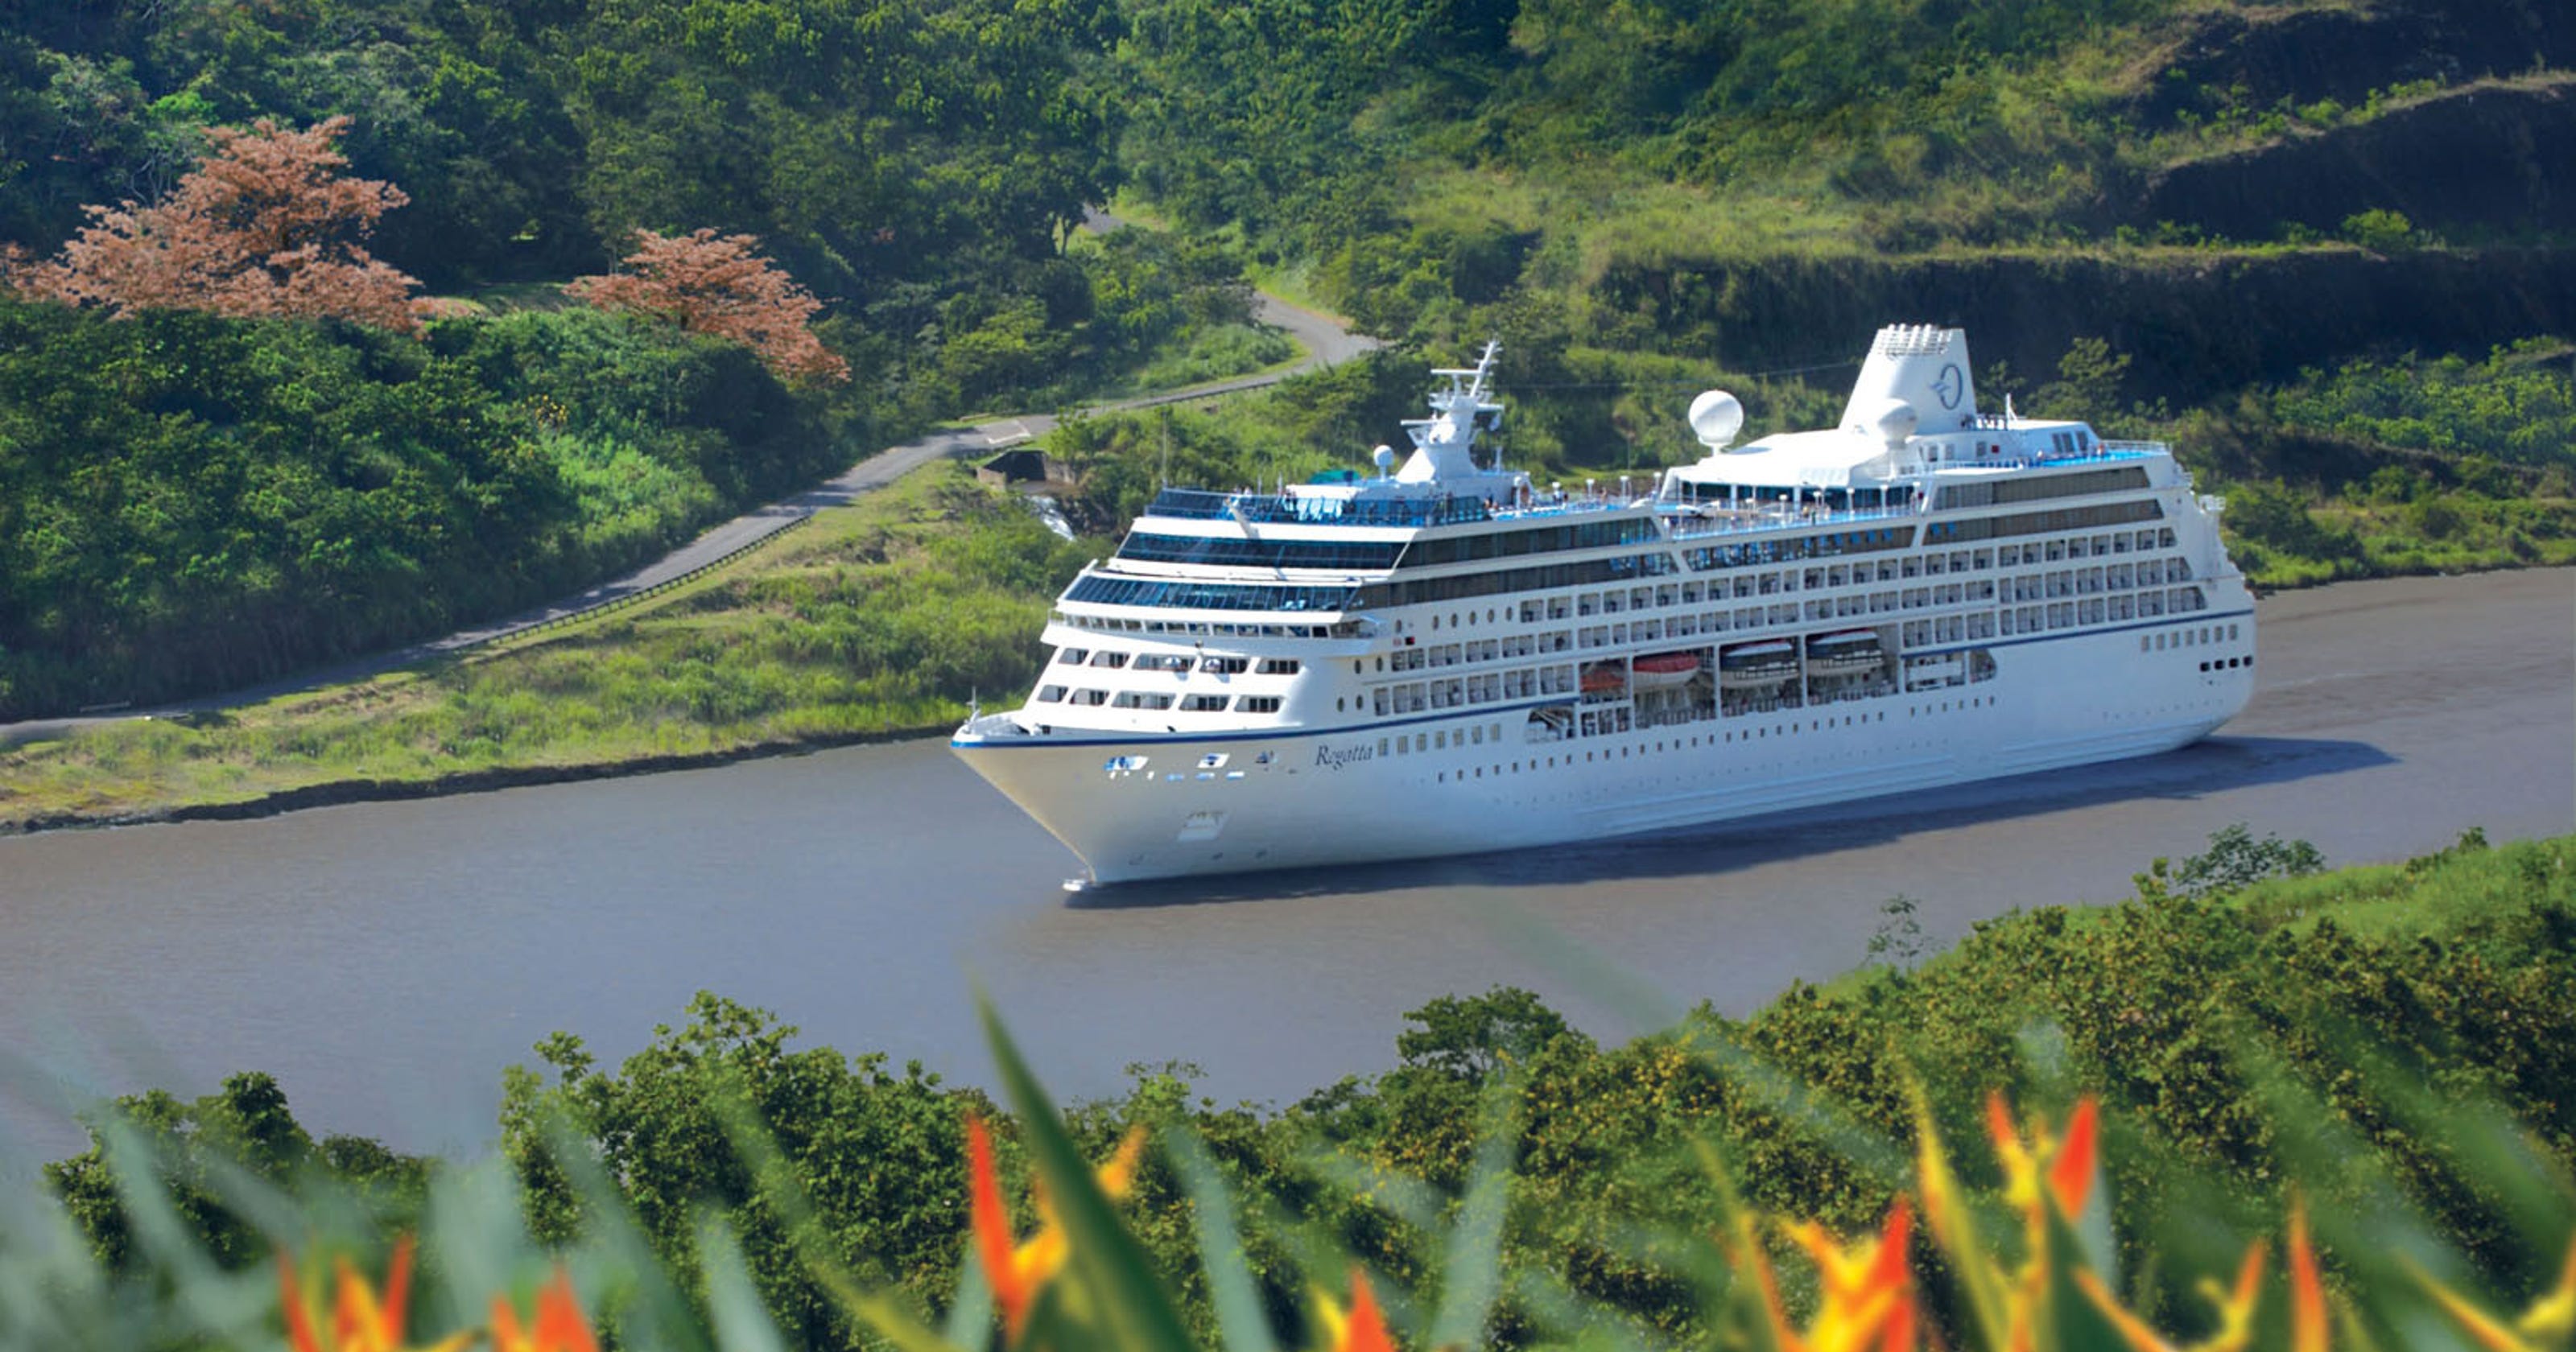 oceania around the world cruise cost